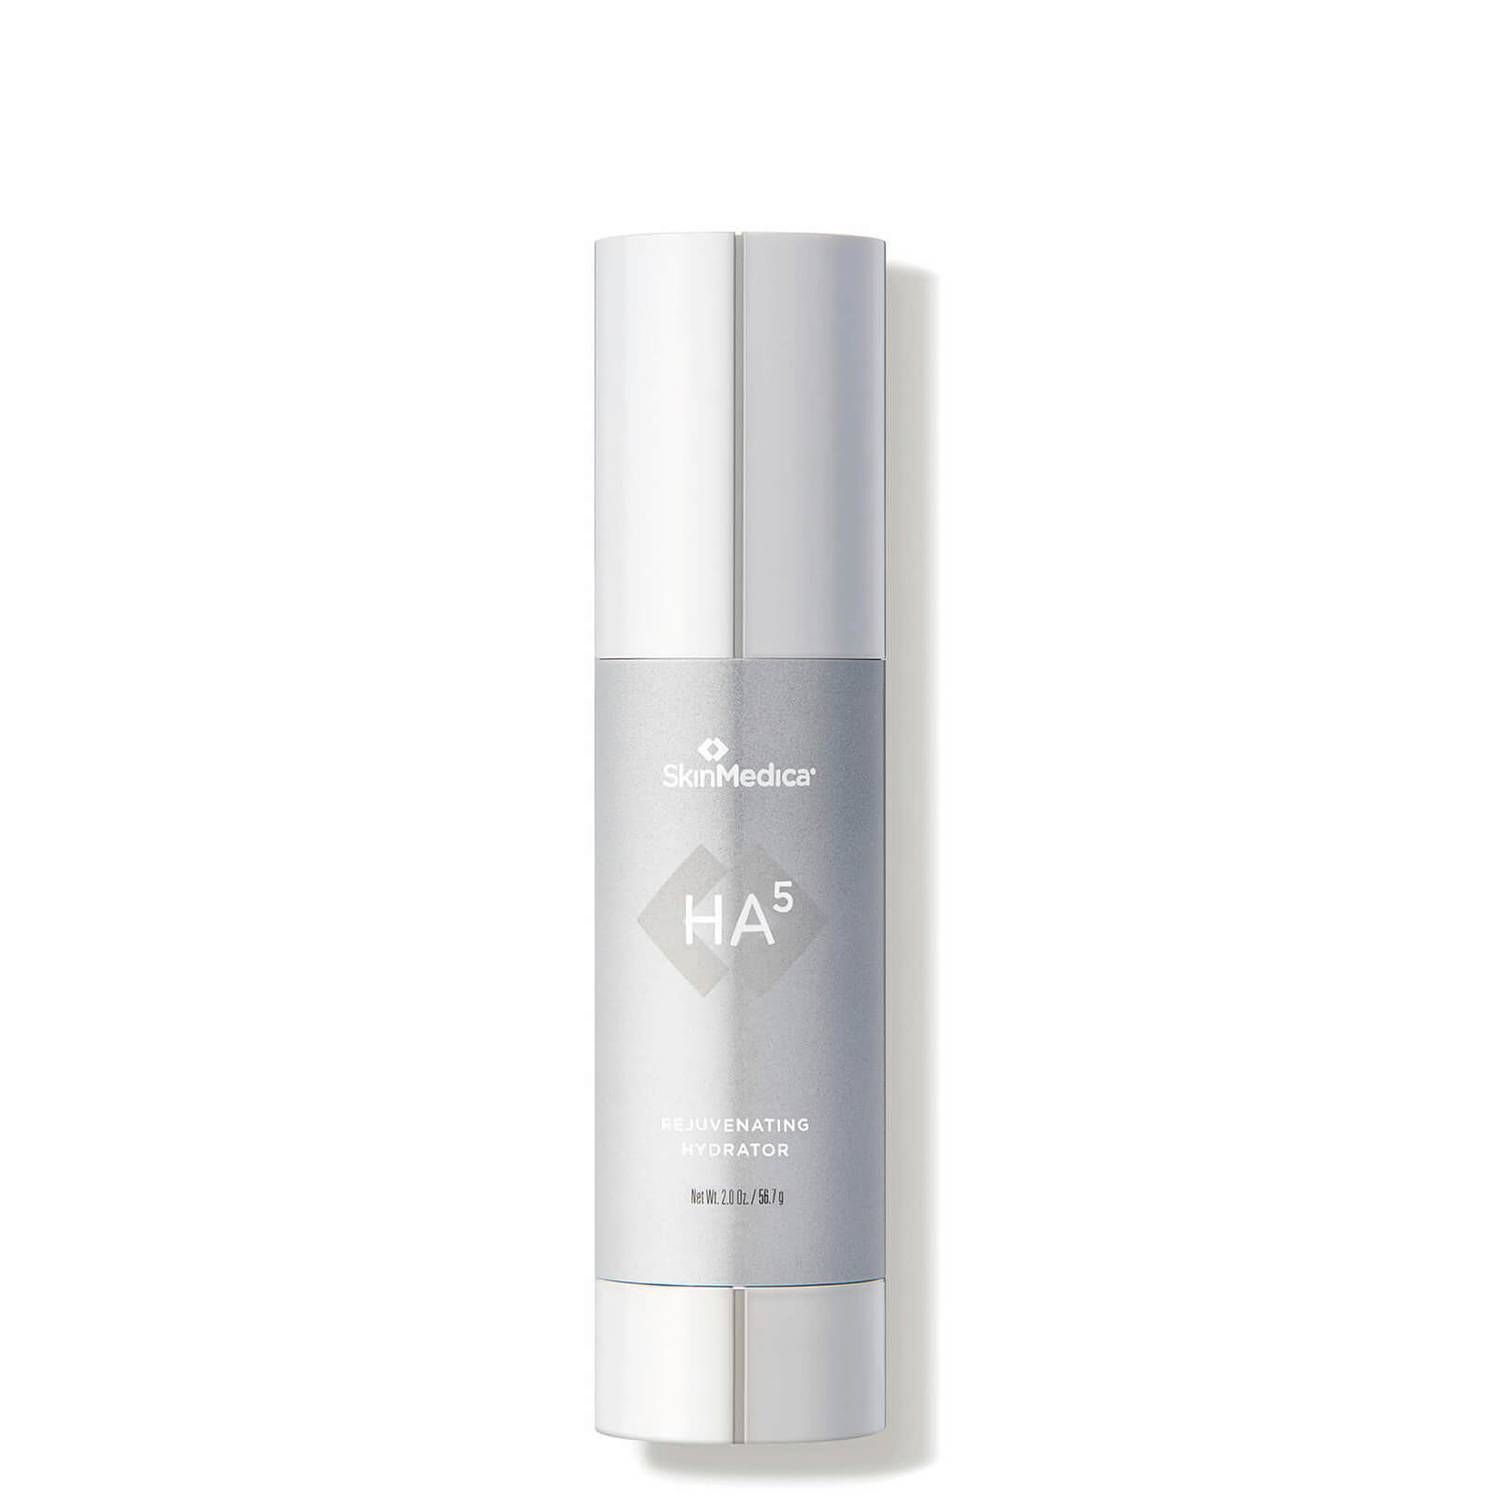 SkinMedica HA5 Rejuvenating Hydrator (2 oz.) | Dermstore (US)